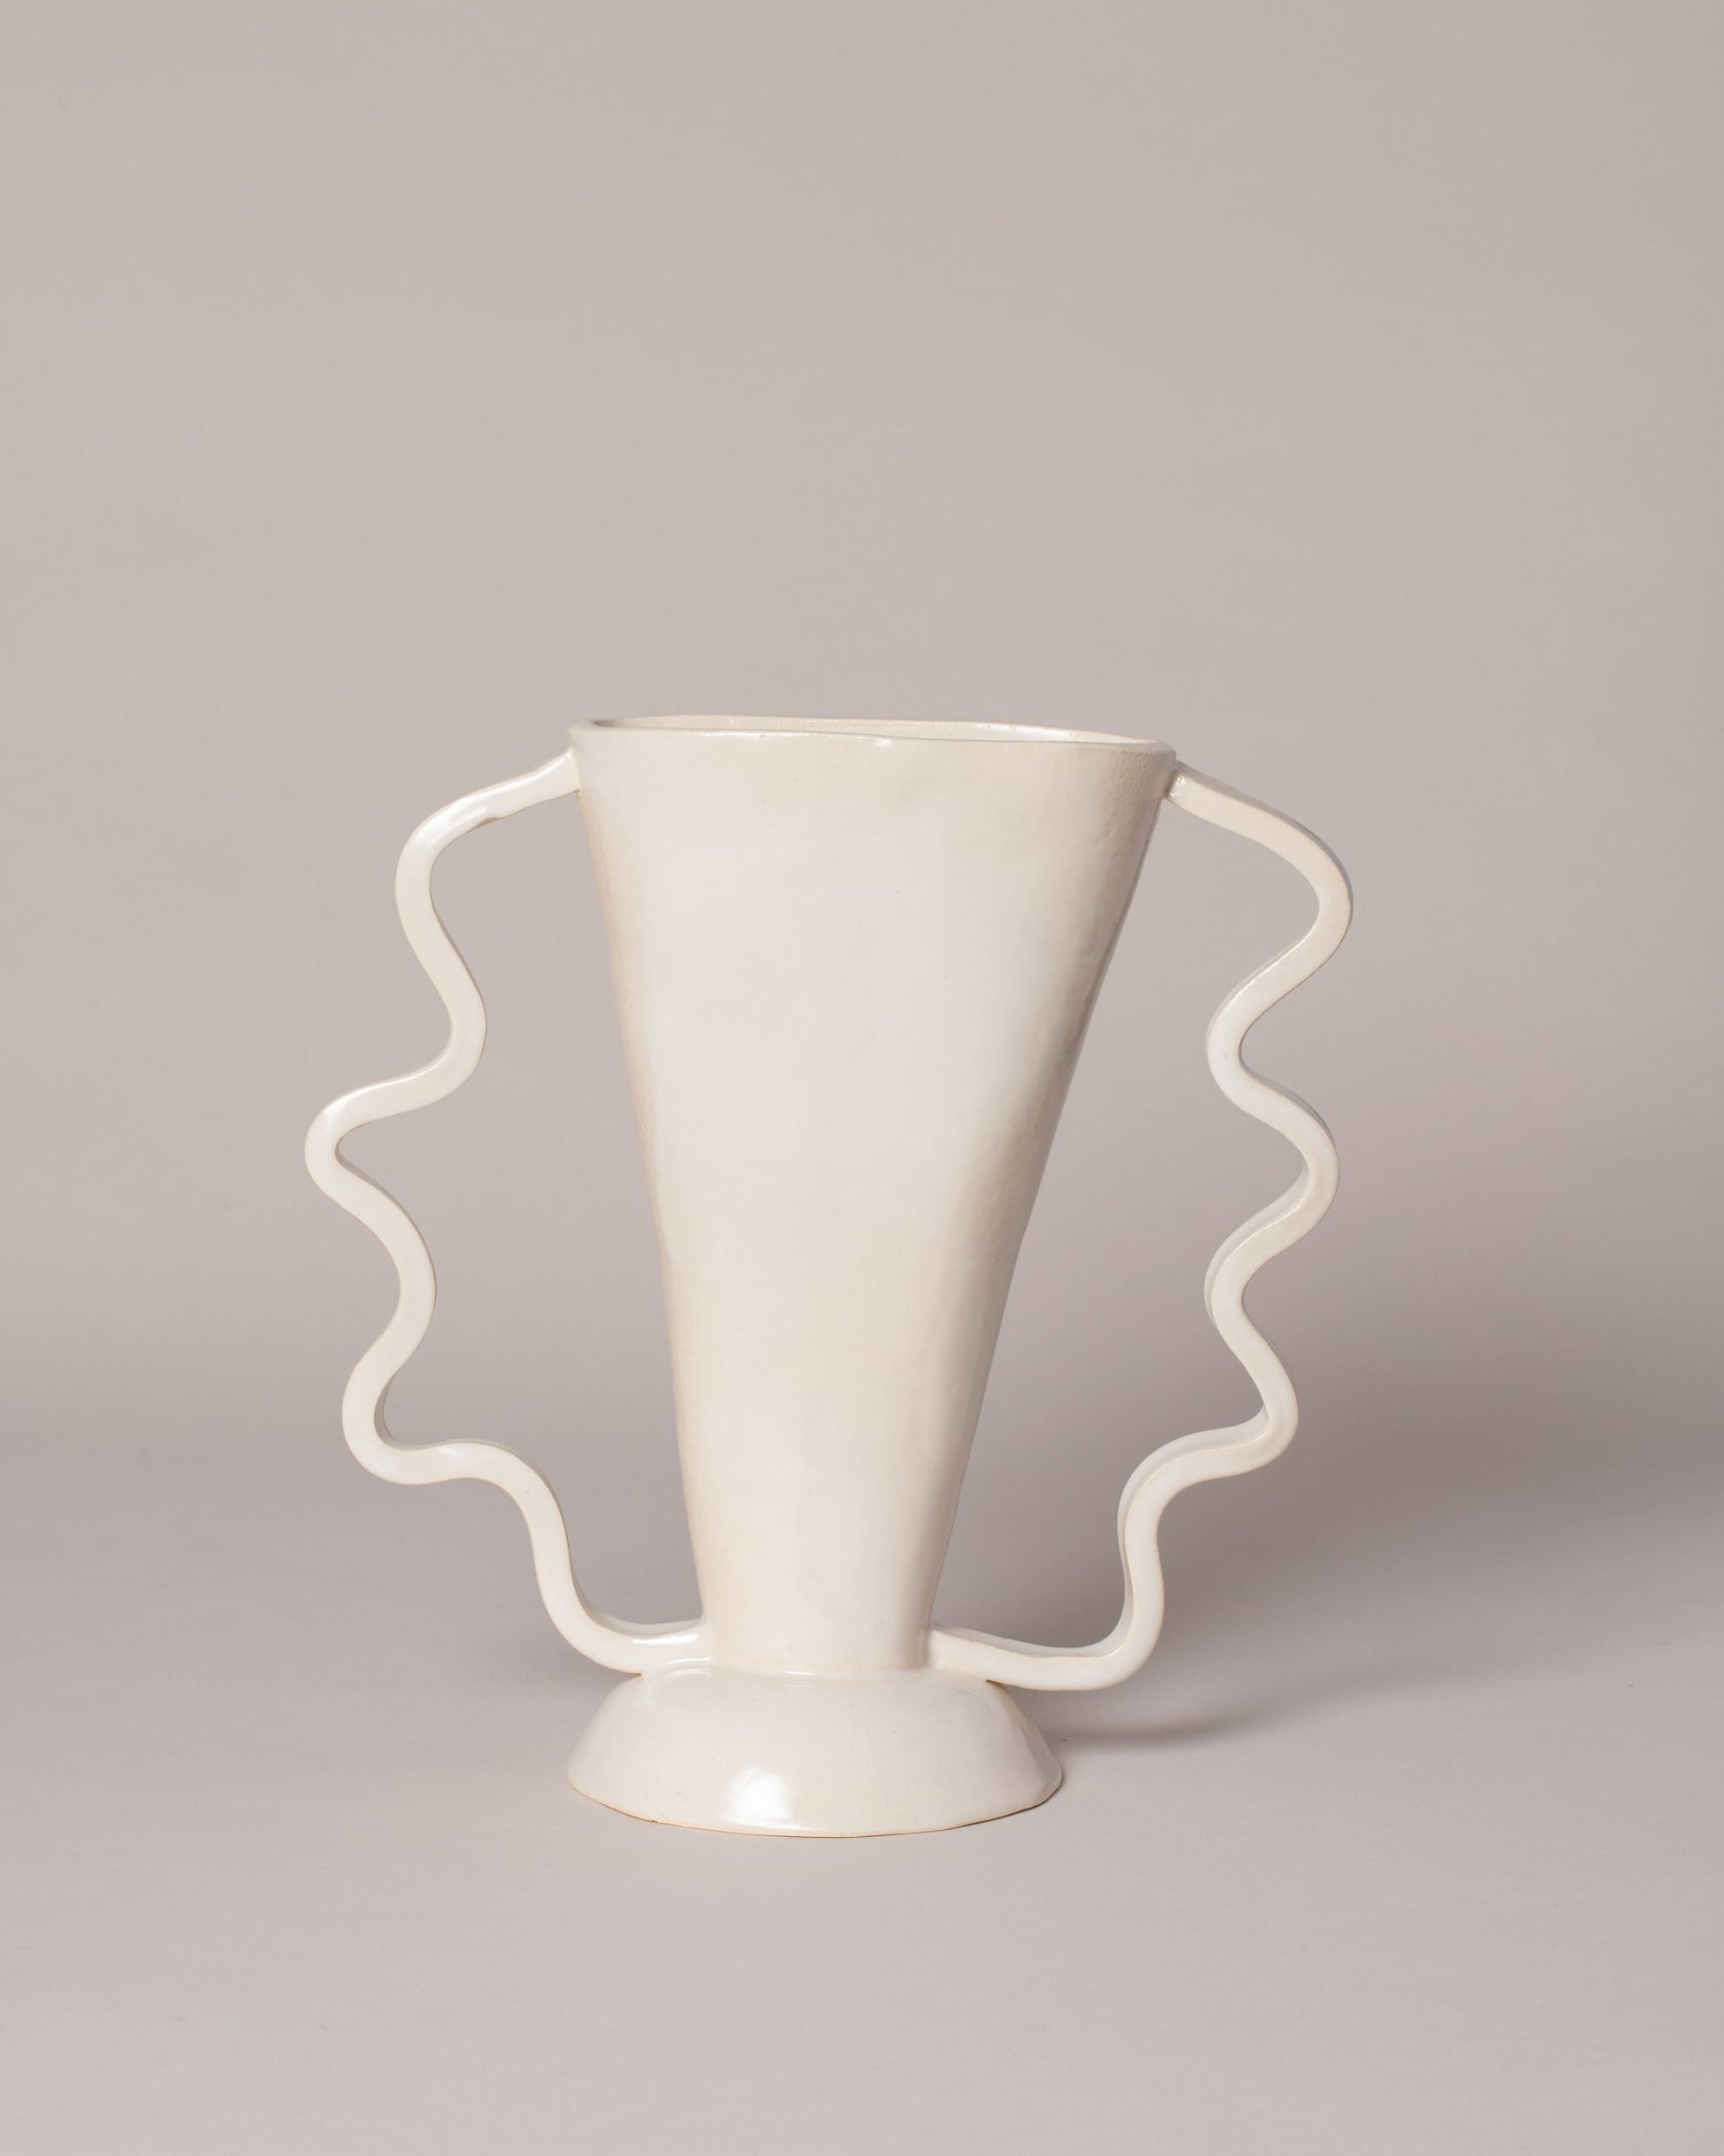 Stretch Vase on light colored background.